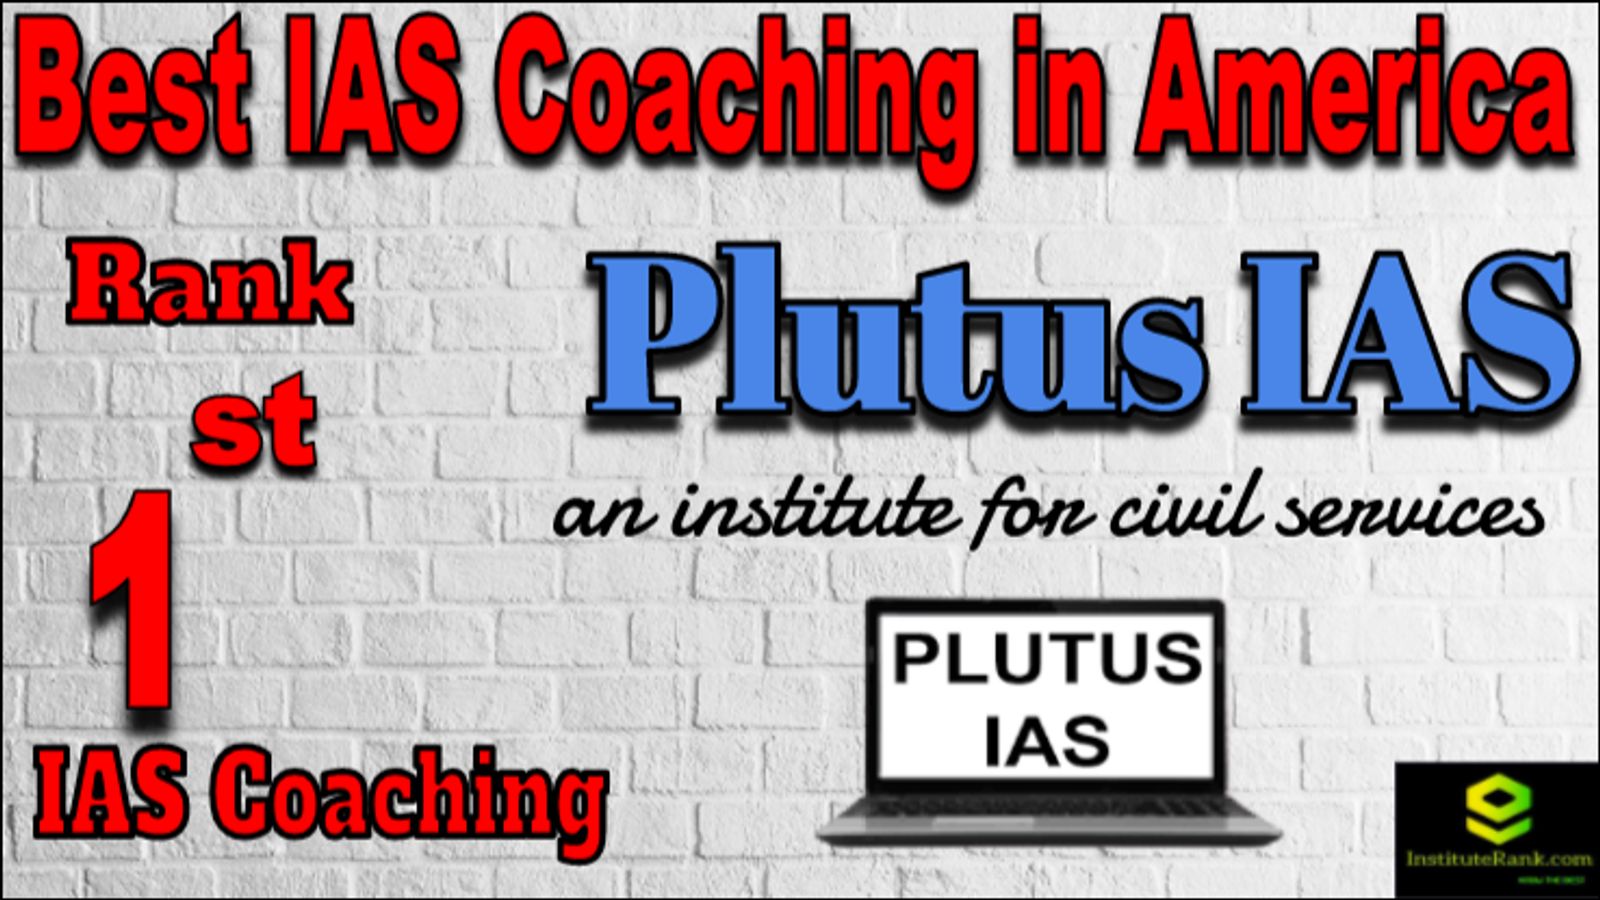 Rank 1 Best IAS Coaching in America